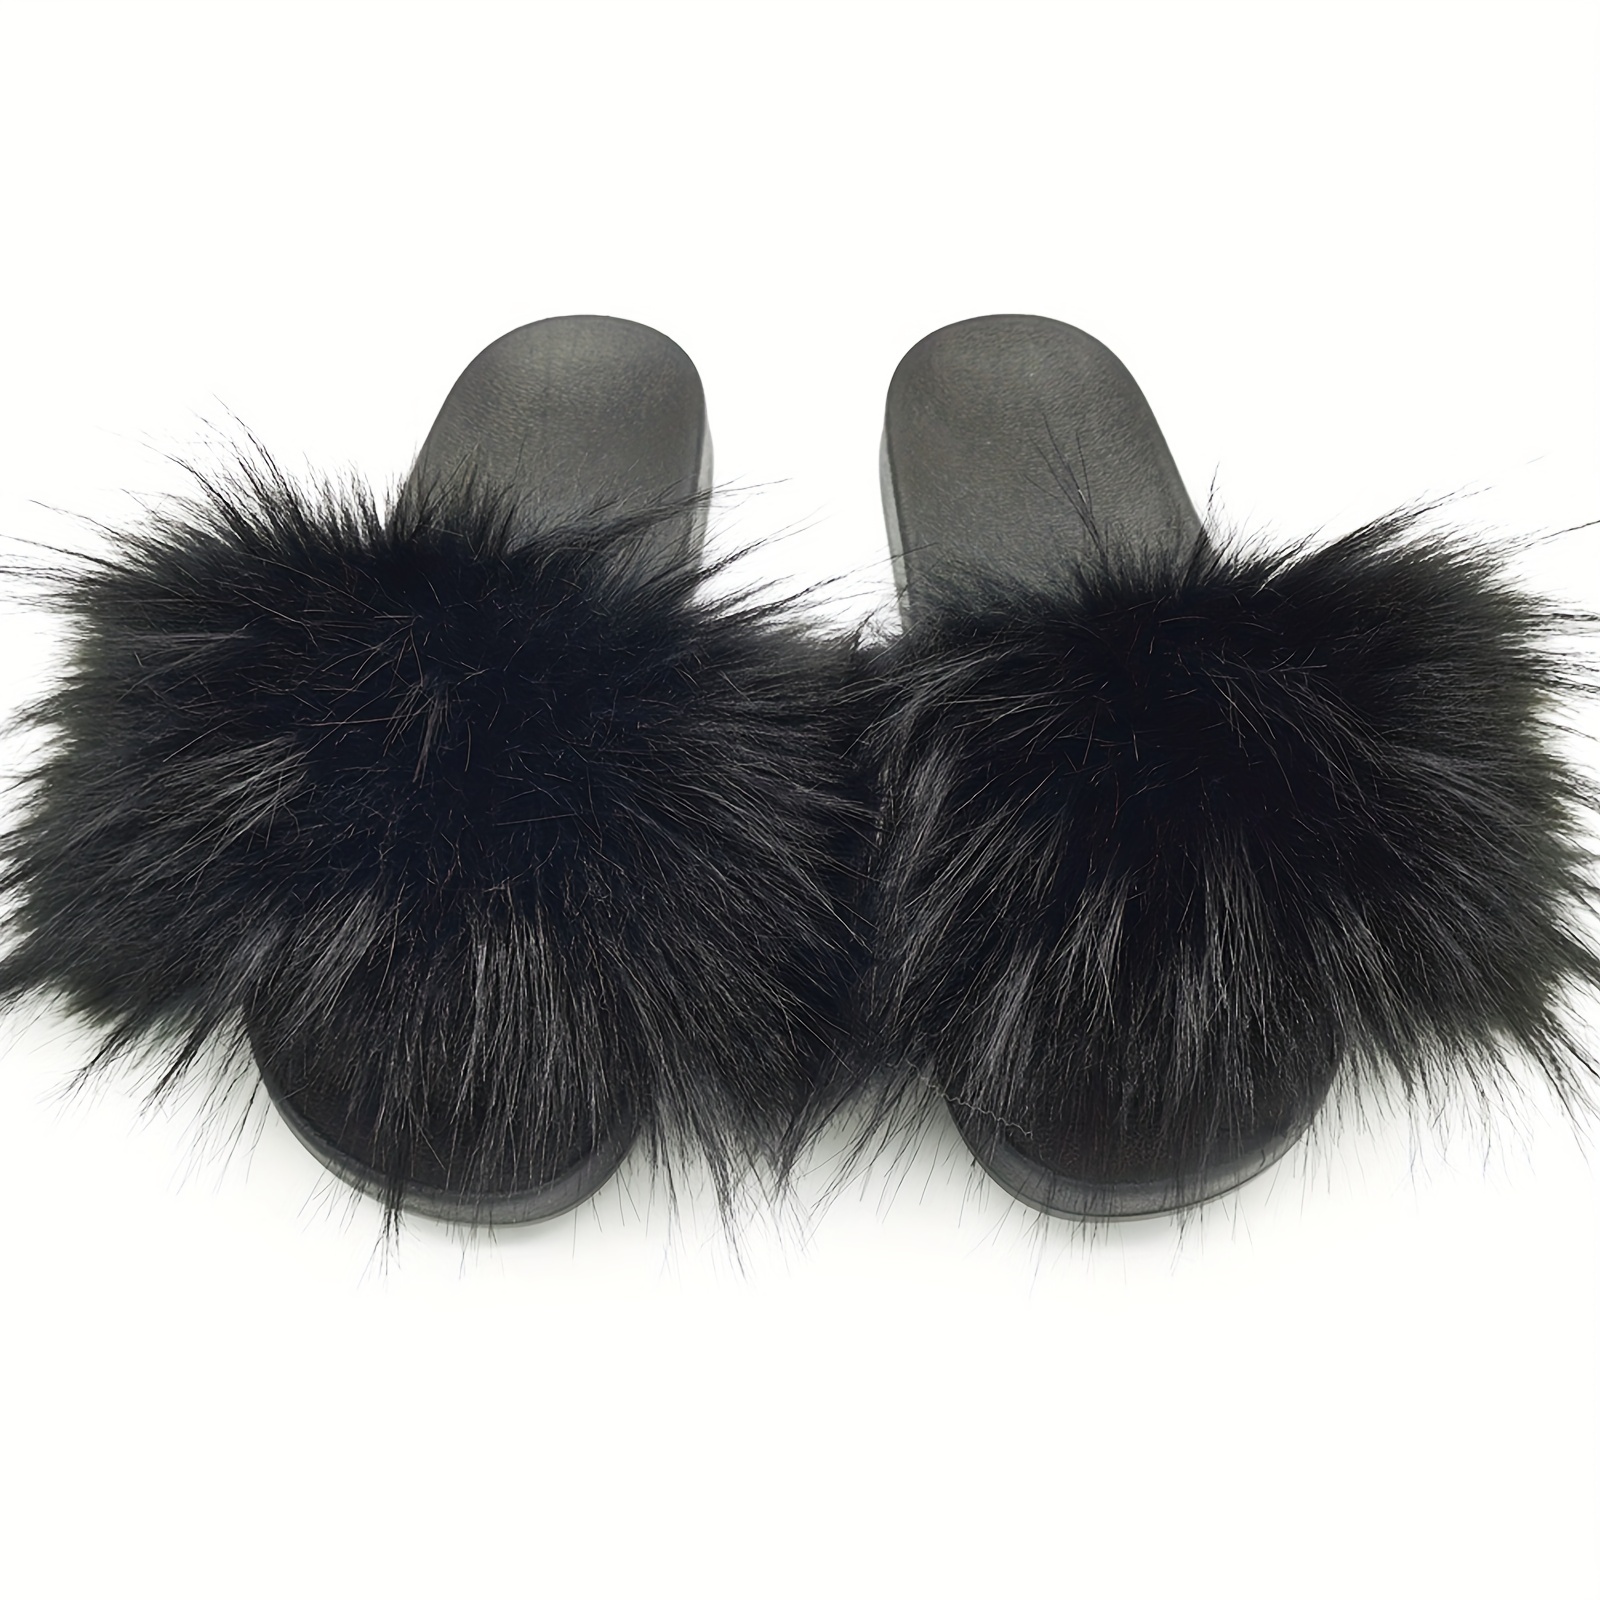 NEW SKIMS Women's Fuzzy Slides Slippers Faux Fur Onyx Black 35 (US 4.5)  NWOB